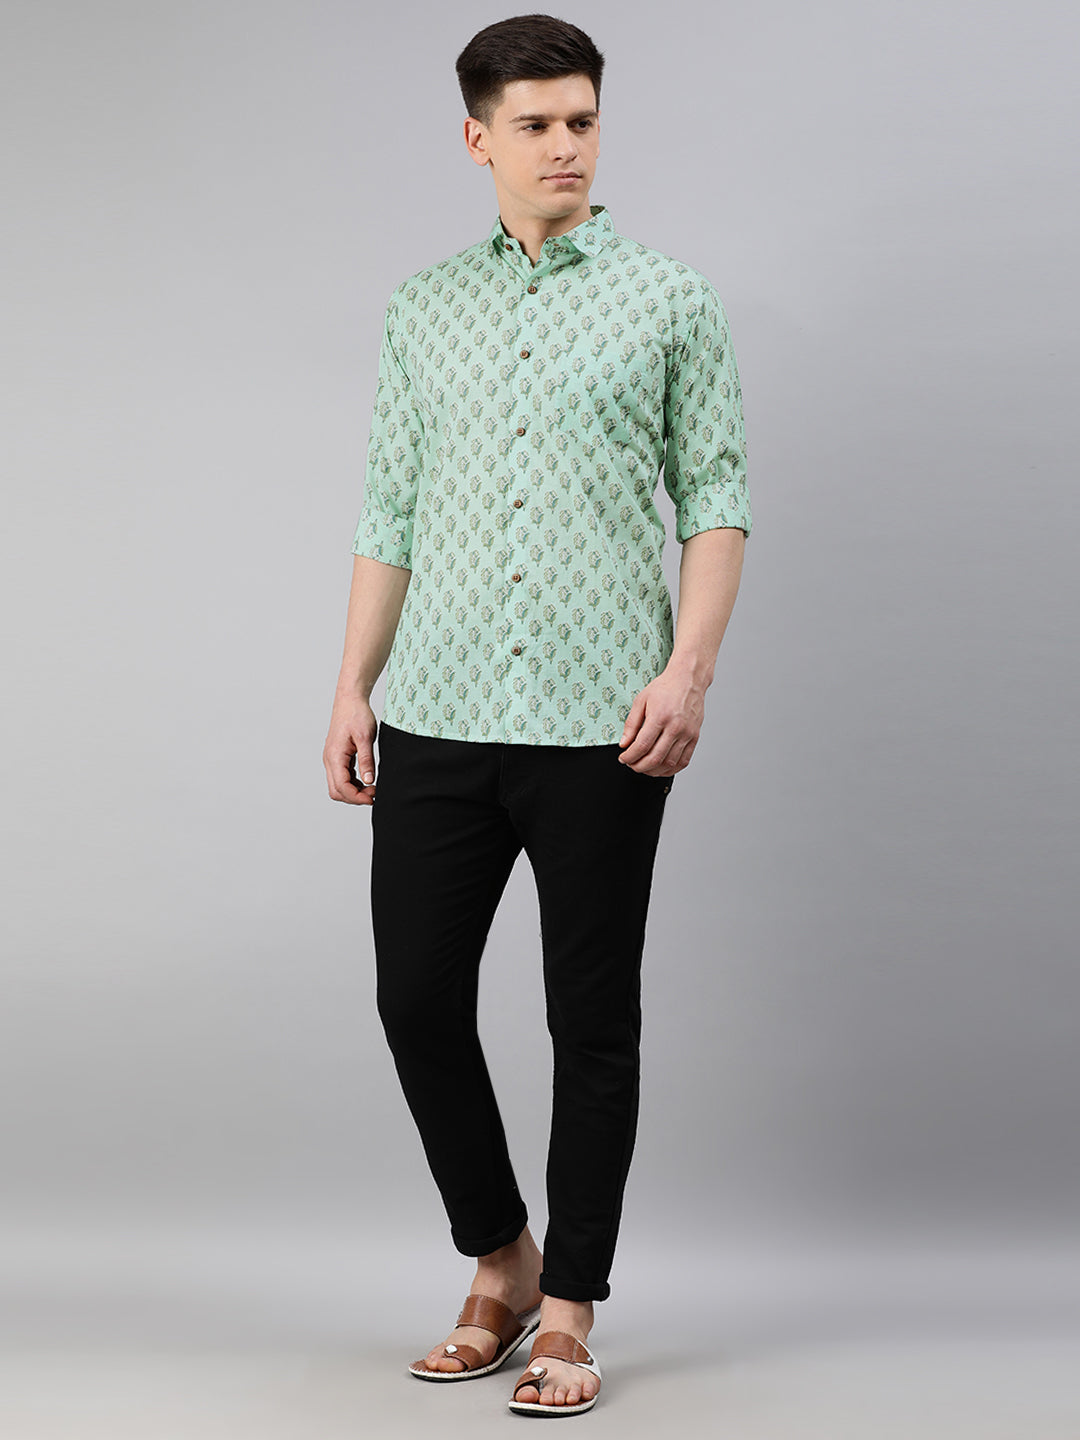 Sea Green Cotton Full Sleeves Shirts For Men-MMF0247 - NOZ2TOZ